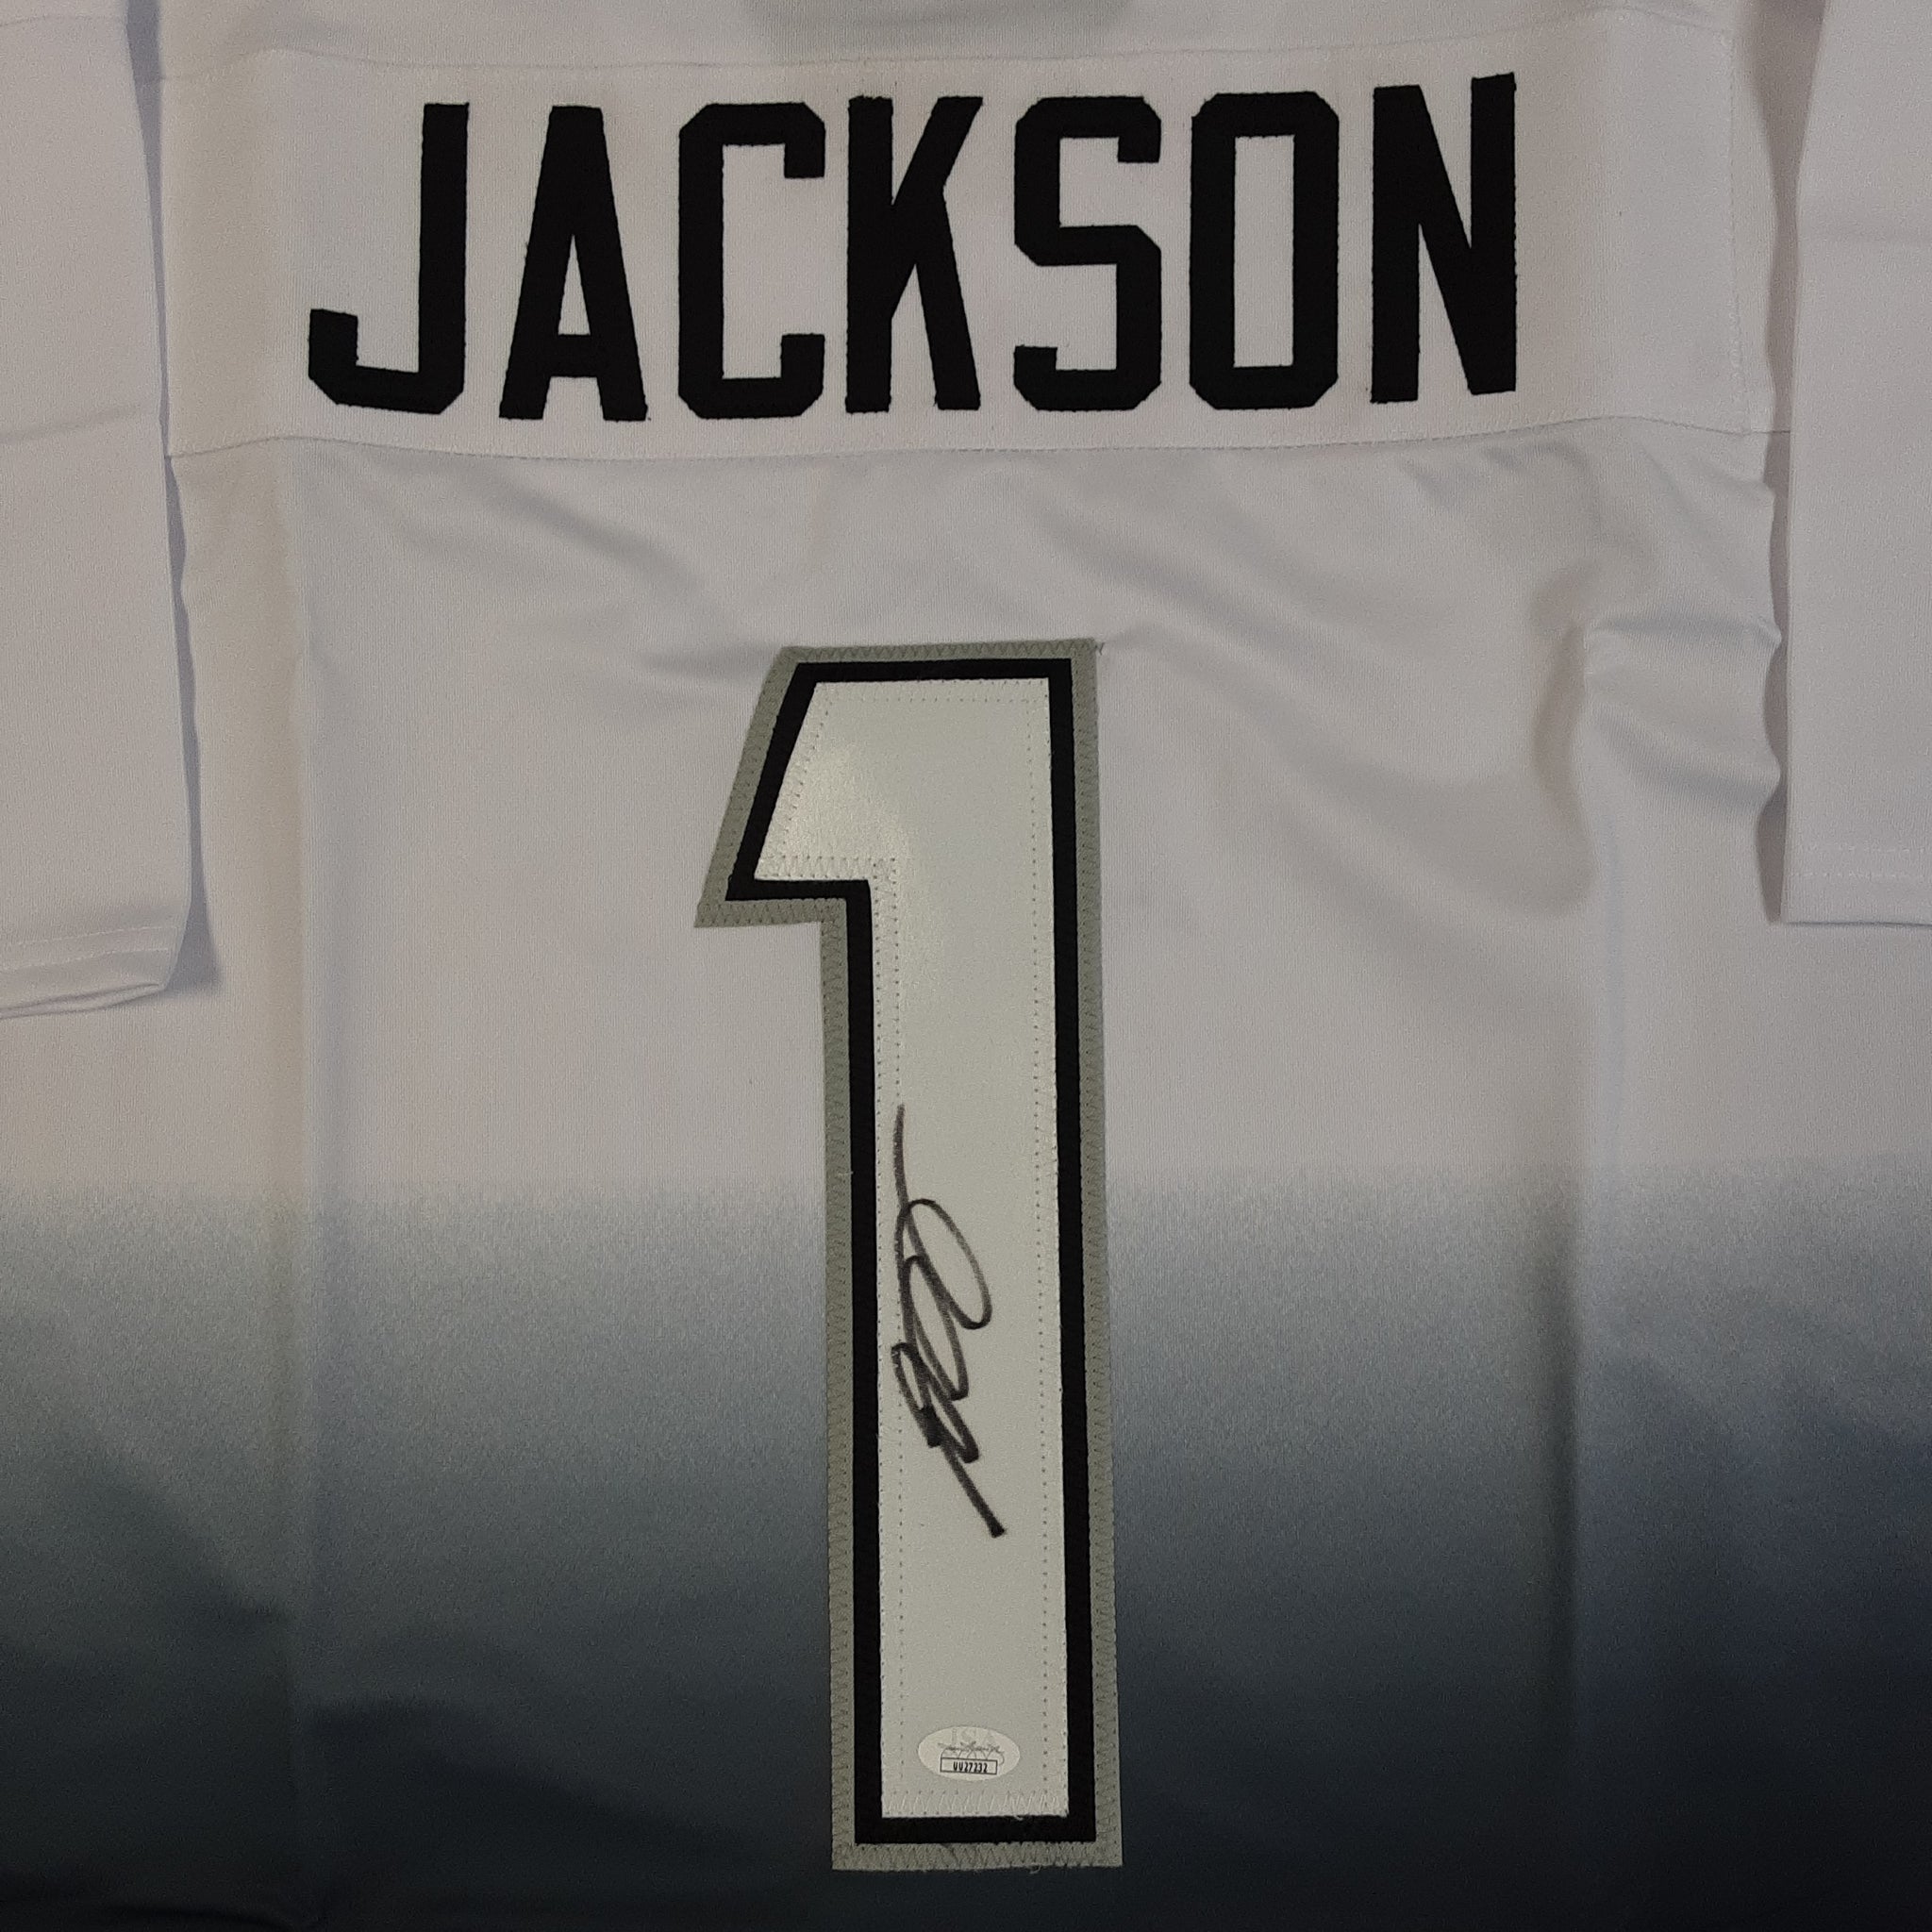 Desean Jackson Signed Pro Style Jersey Autographed JSA